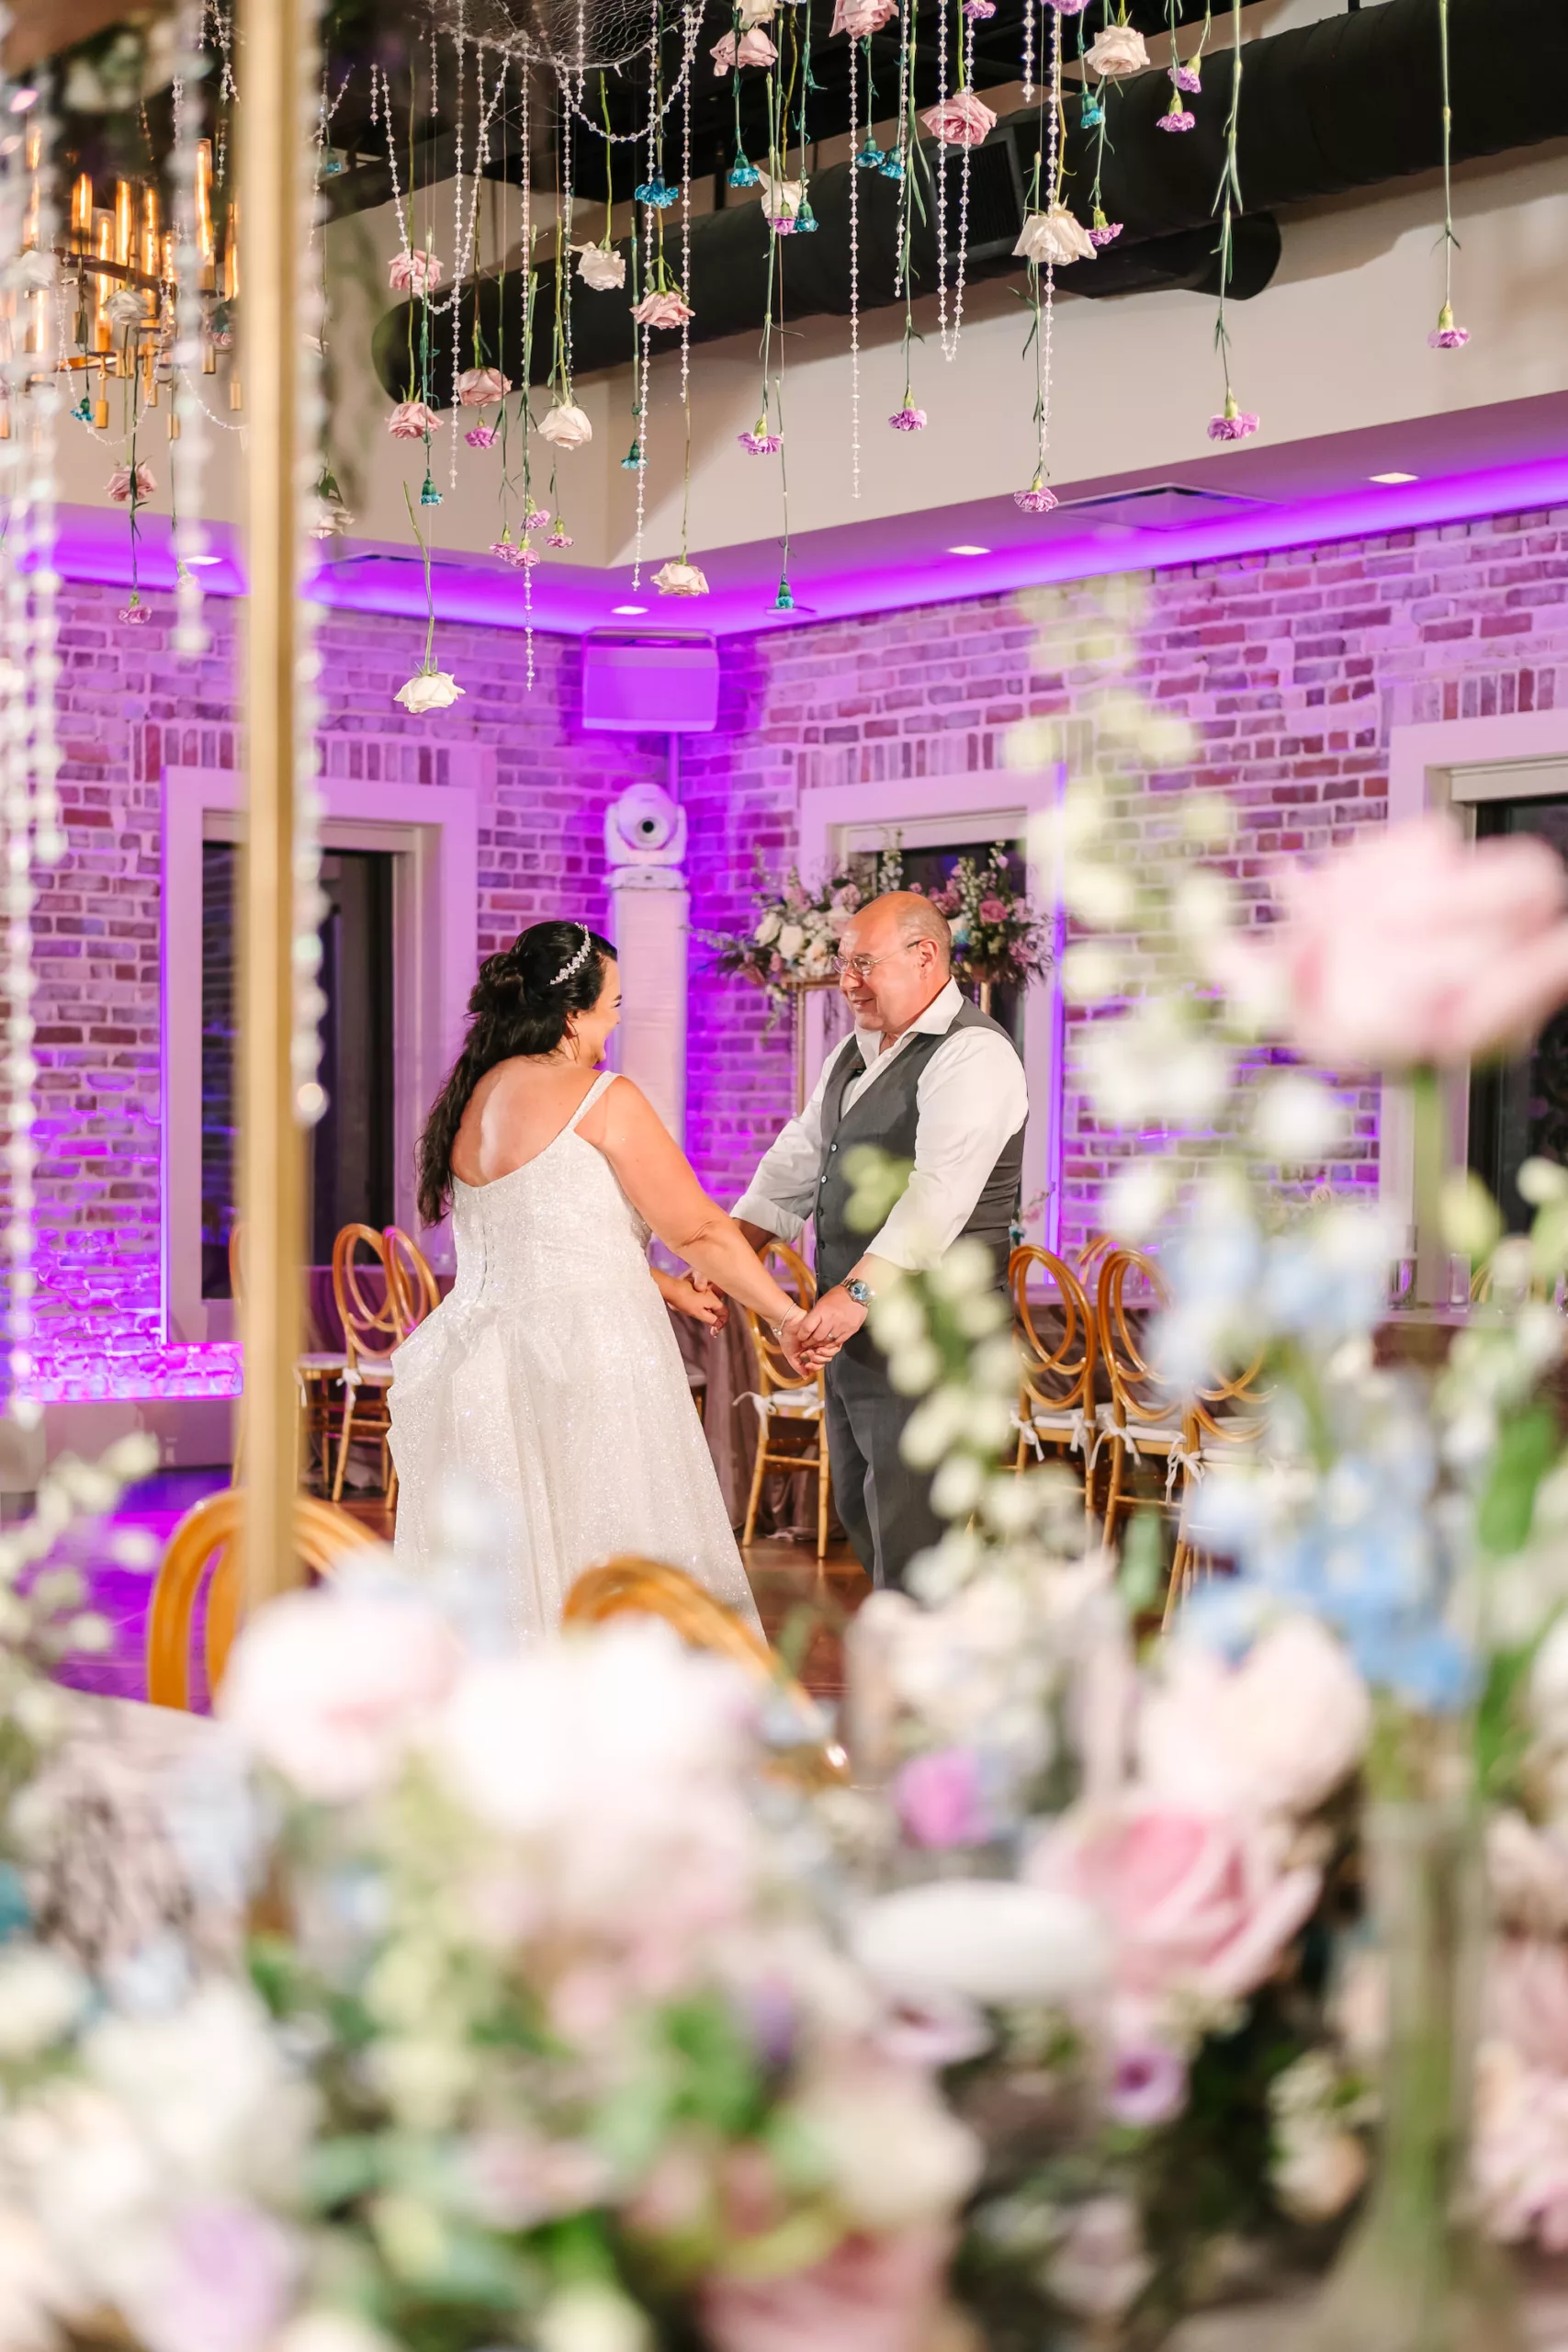 Bride and Groom Private Last Dance Wedding Portrait | Tampa Bay Event Venue Red Mesa Events